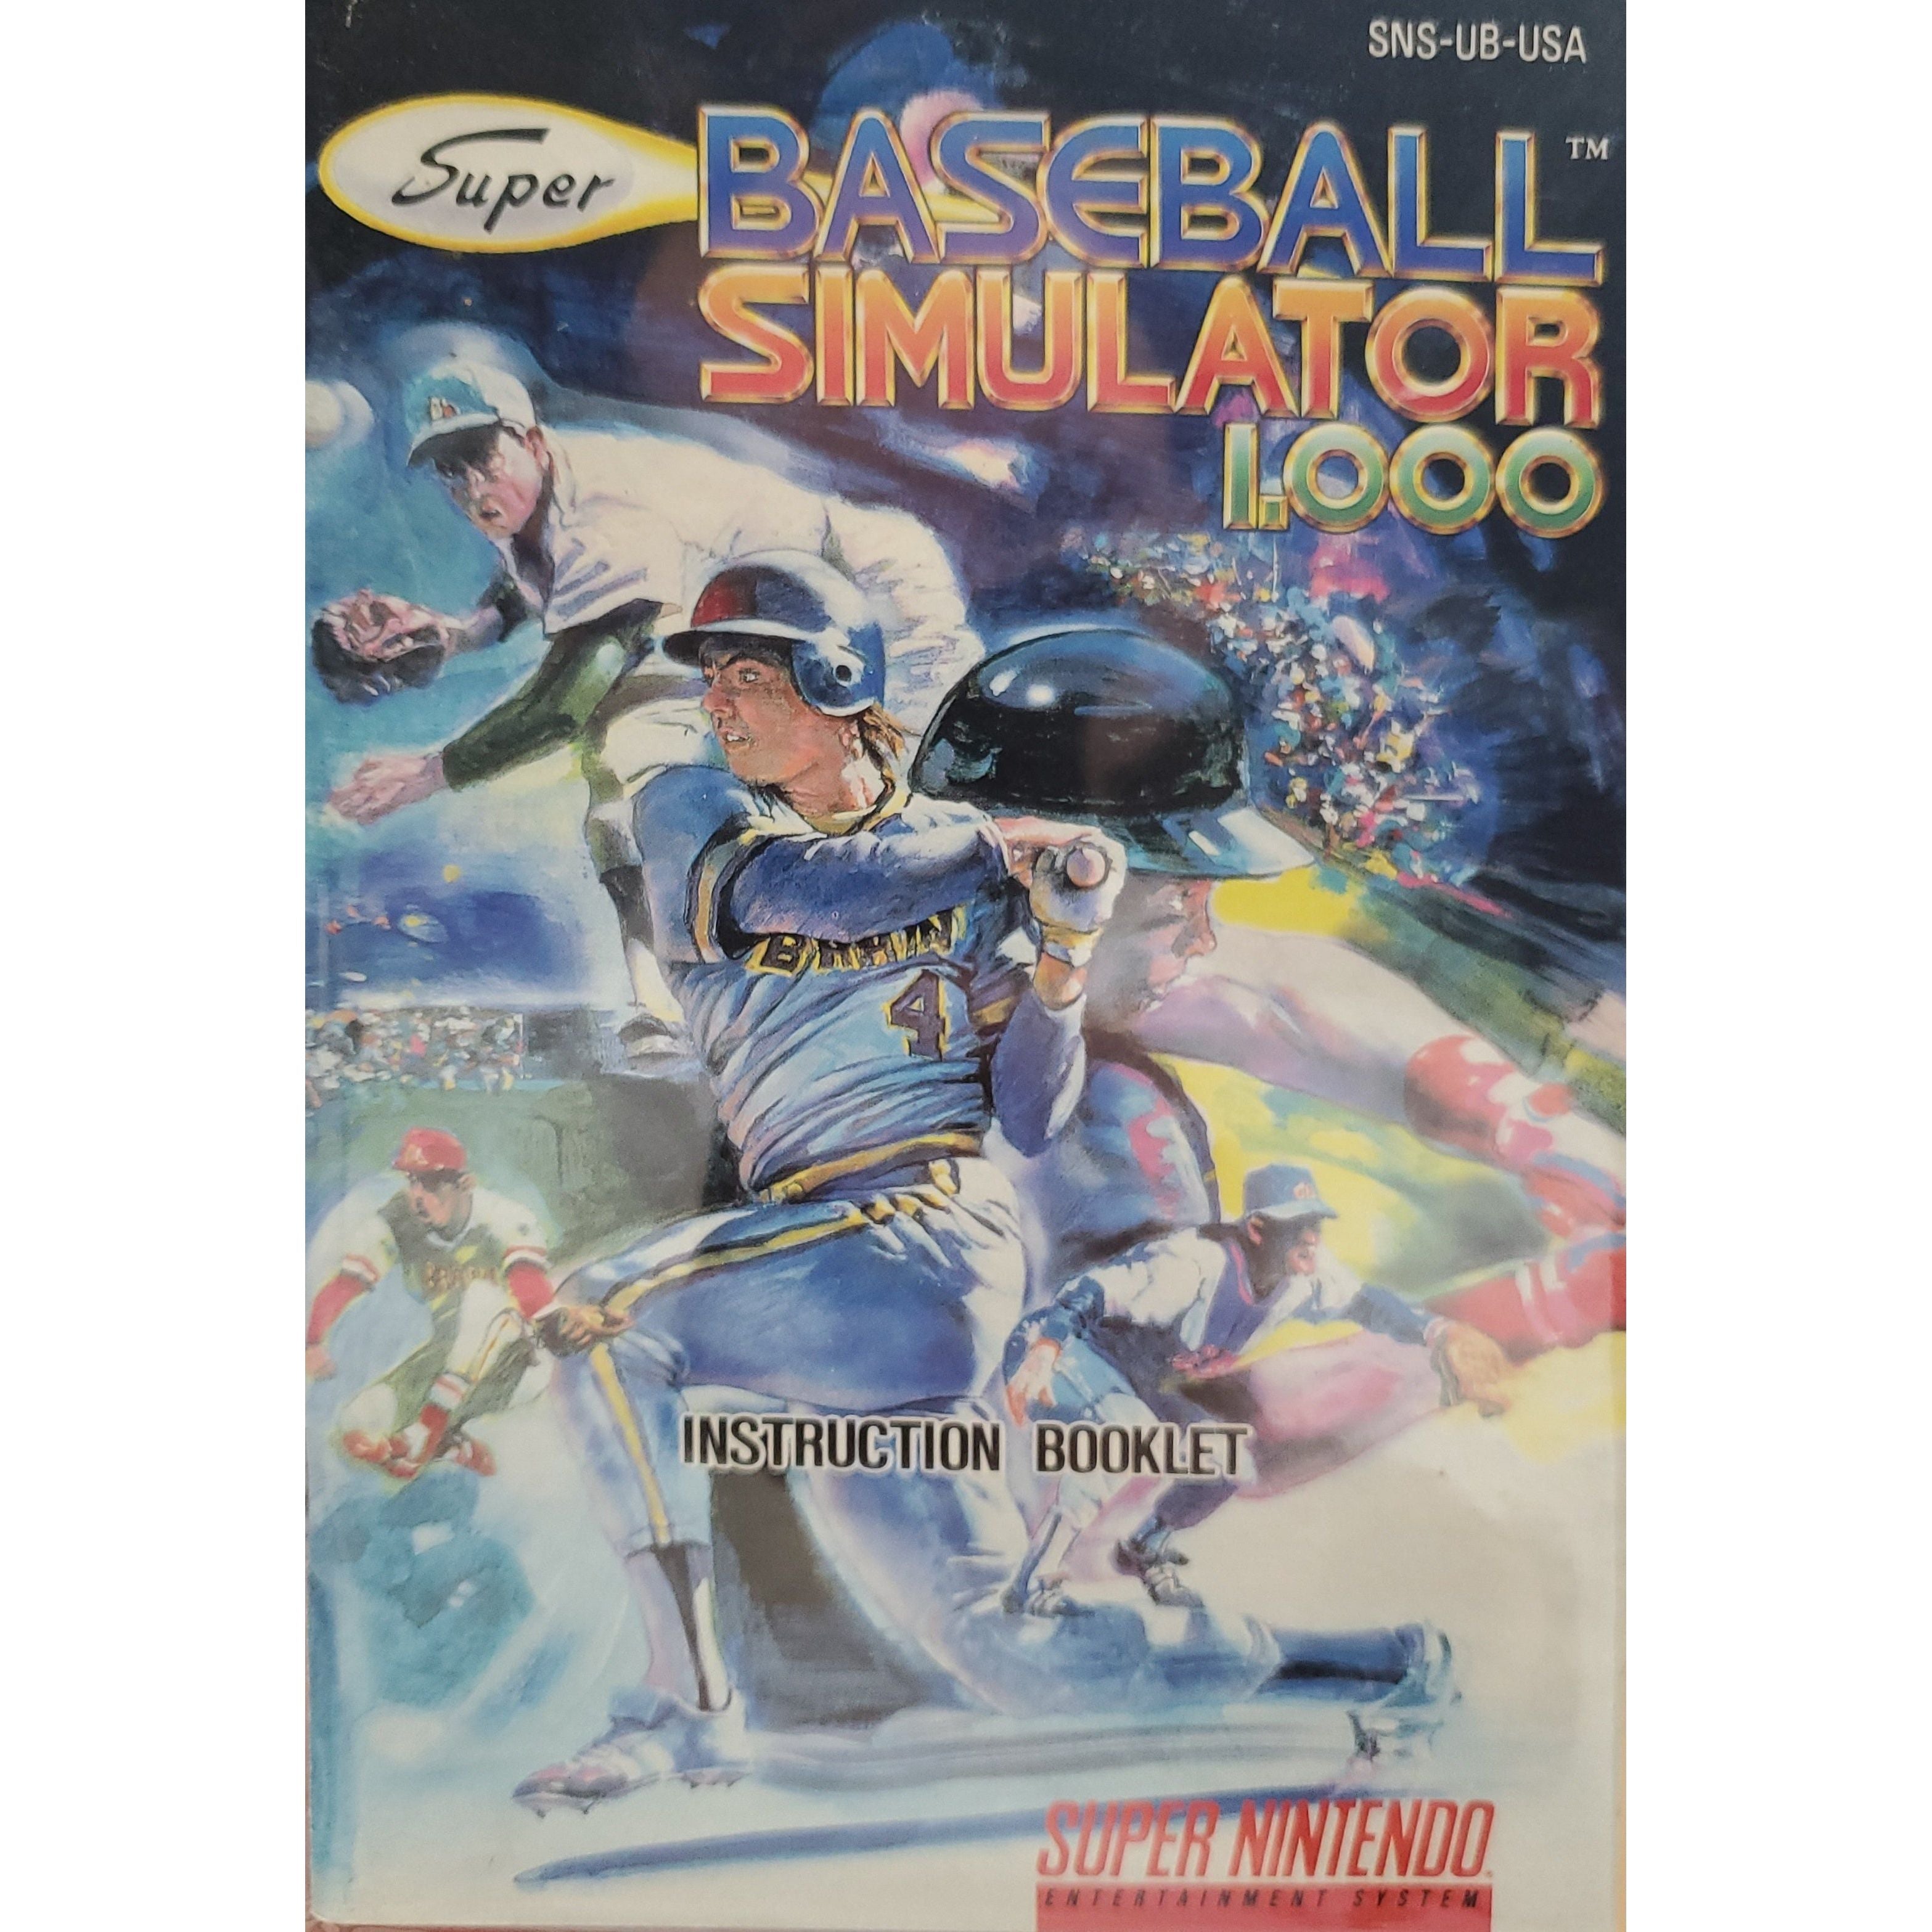 SNES - Super Baseball Simulator 1000 (Manual)